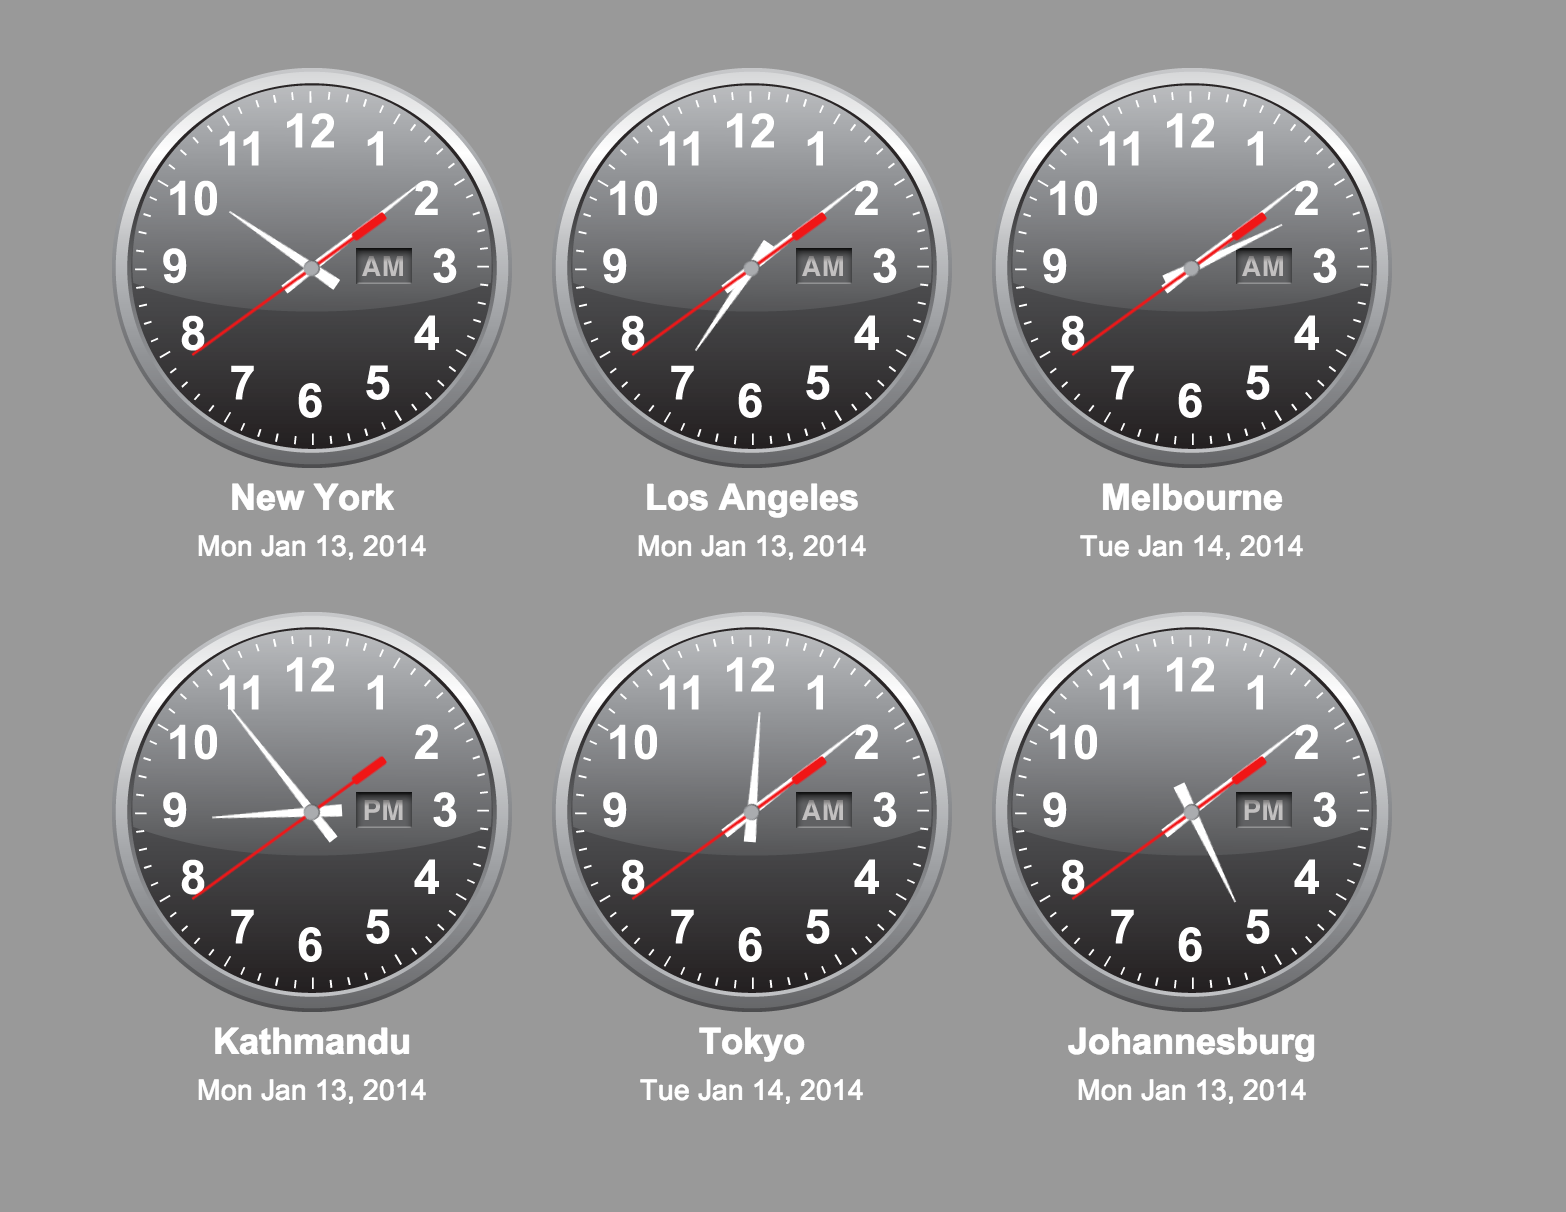 digital time clock software free download